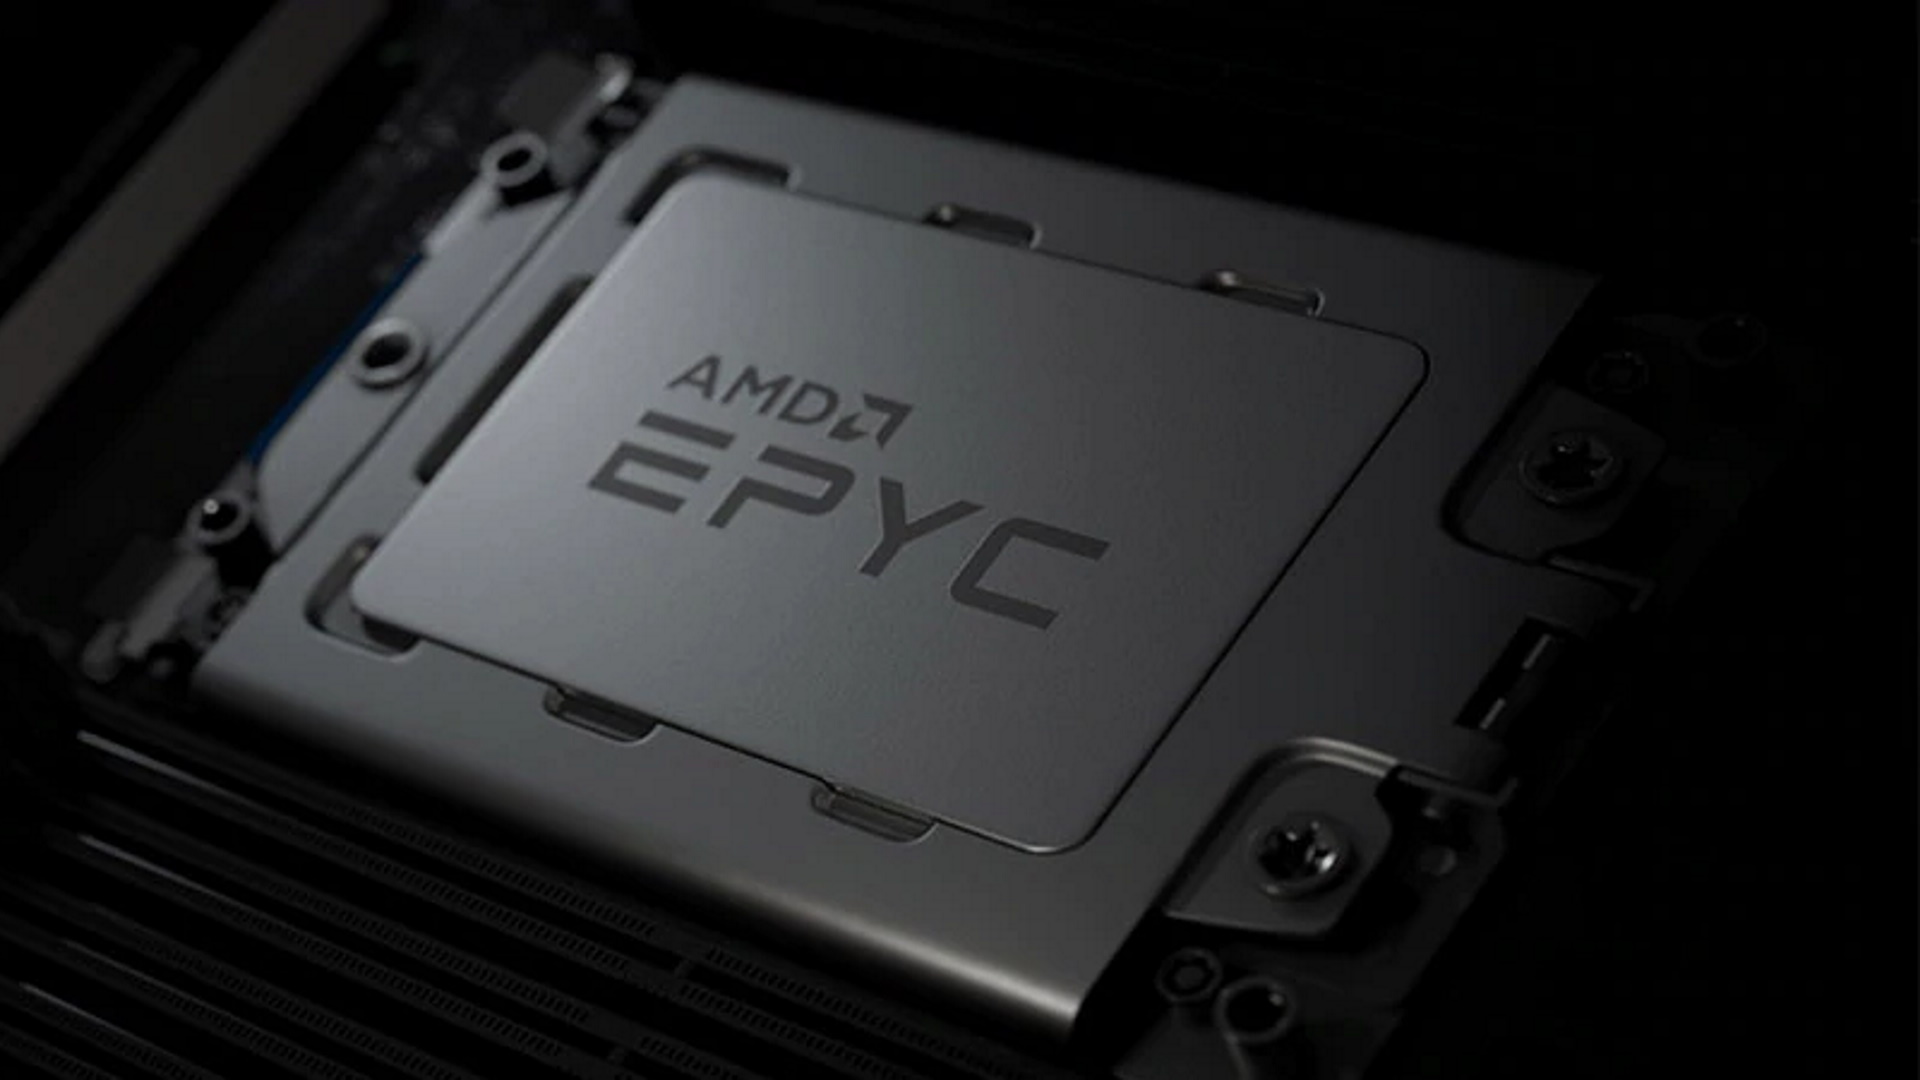  AMD isn't just buying from TSMC, TSMC is buying EPYC chips from AMD 